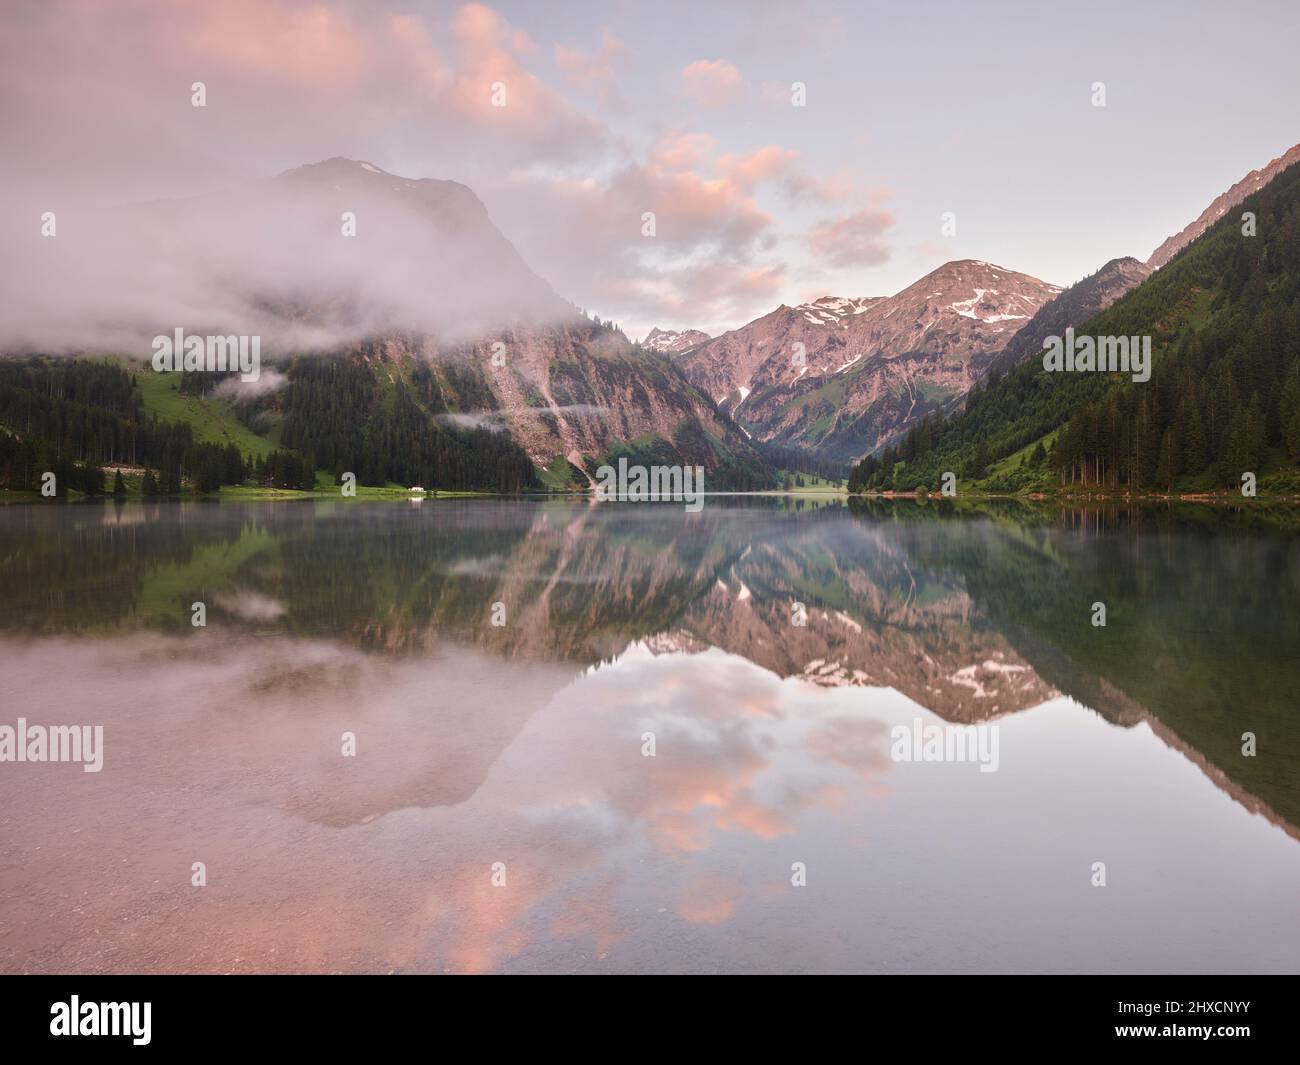 Vilsalpsee, Allgäu Alps, Tyrol, Austria Stock Photo